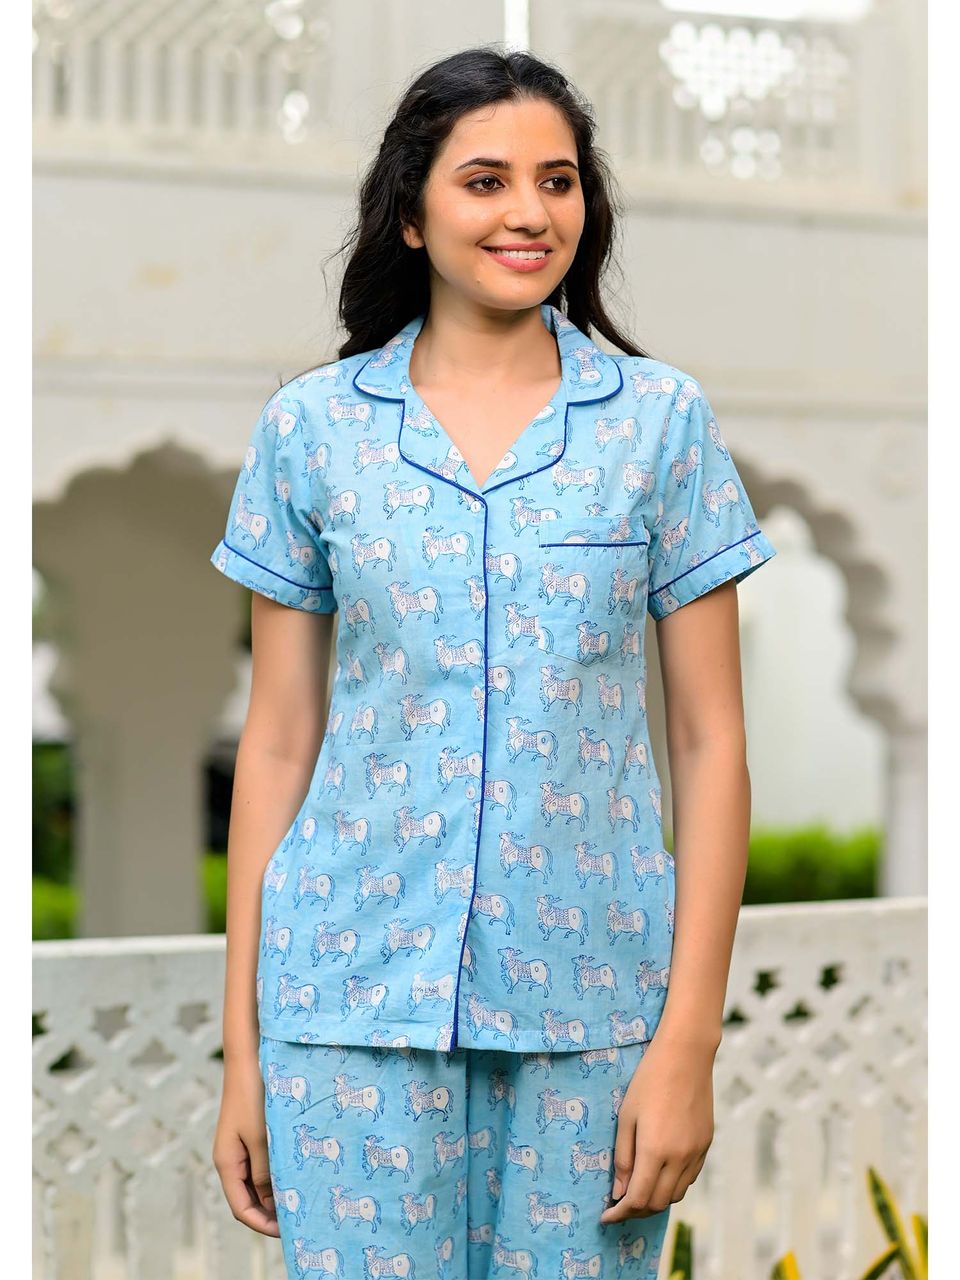 Indian Night Suit, Women Nightwear, Cotton Pajamas Set, Pure Cotton Ultra  Soft Nightwear, Sleep Wear Cotton Pants and Collar Pattern Shirt - Etsy